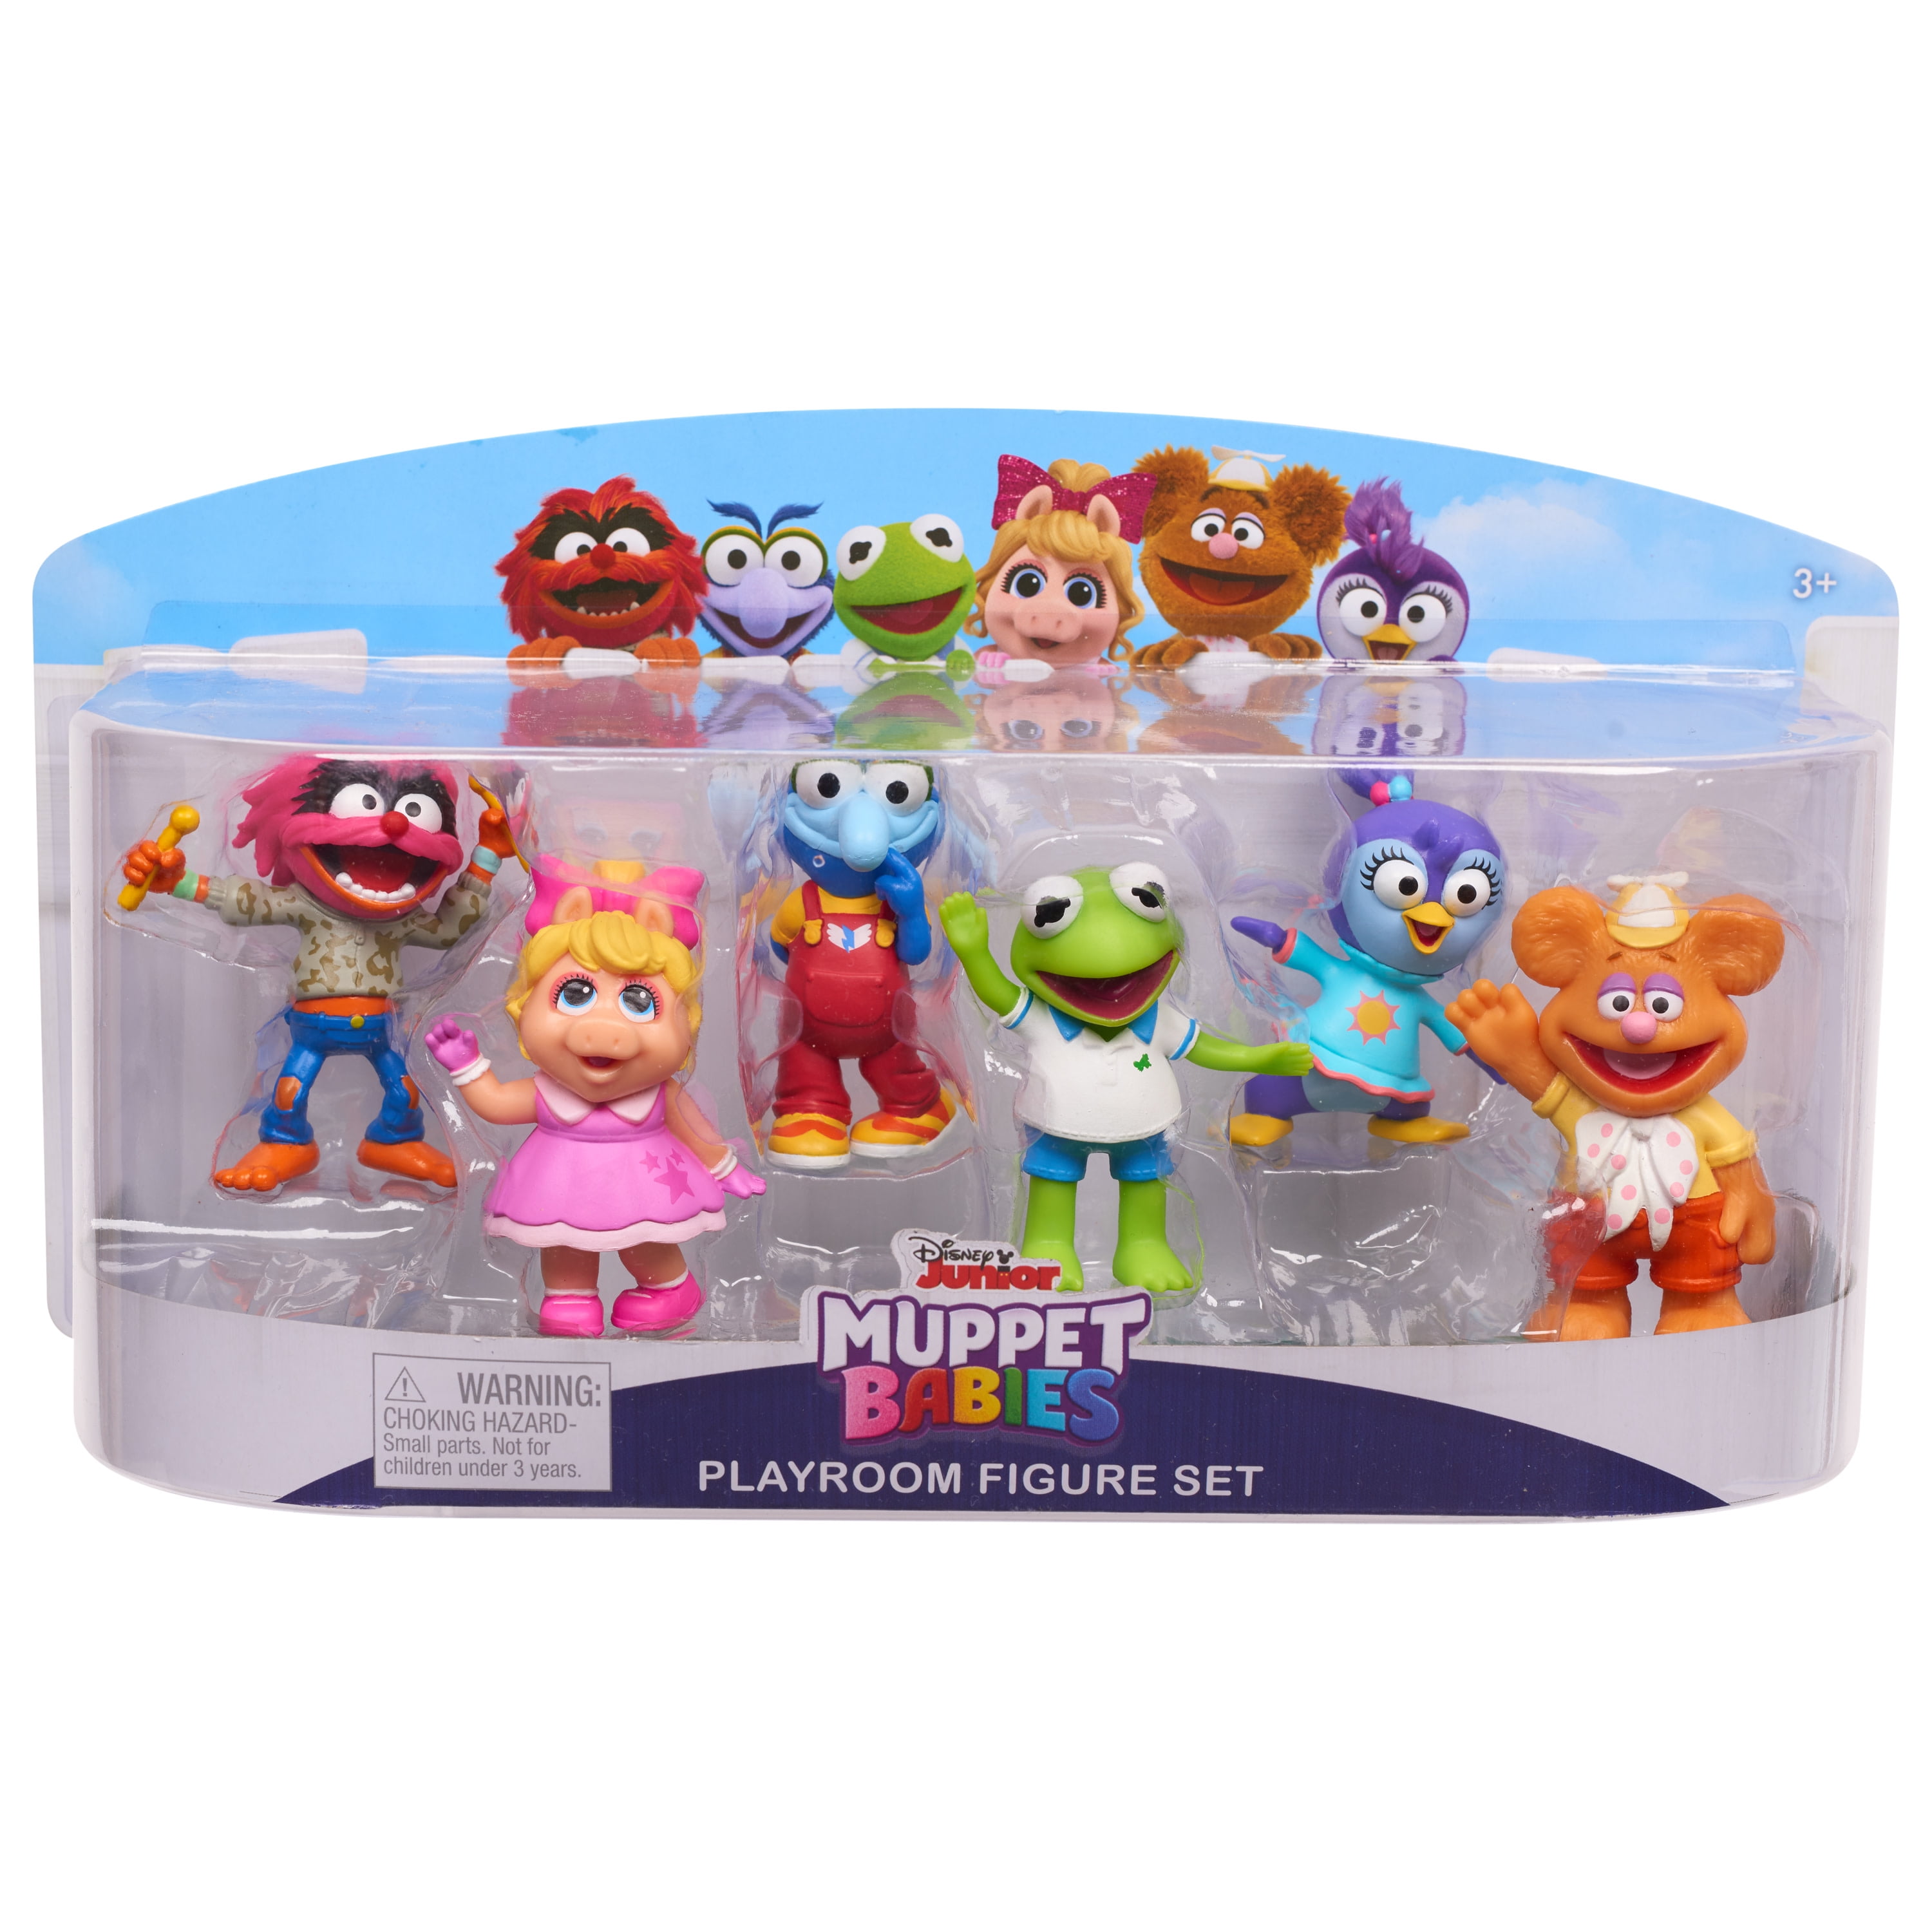 Muppet Babies Playroom Figure Set - 6 